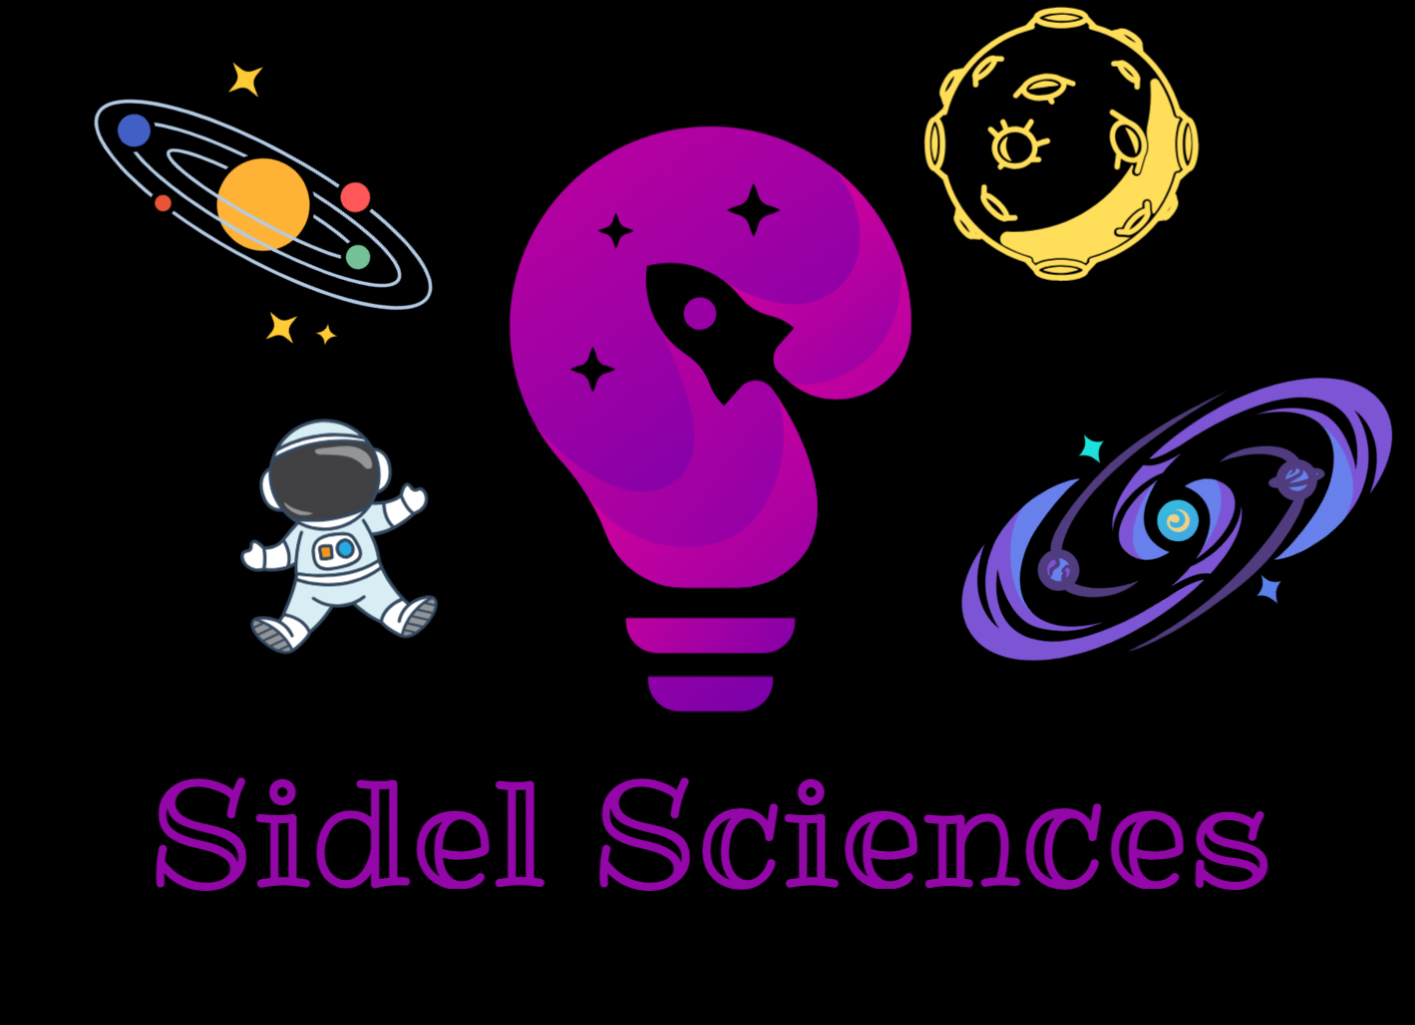 Sidel Sciences